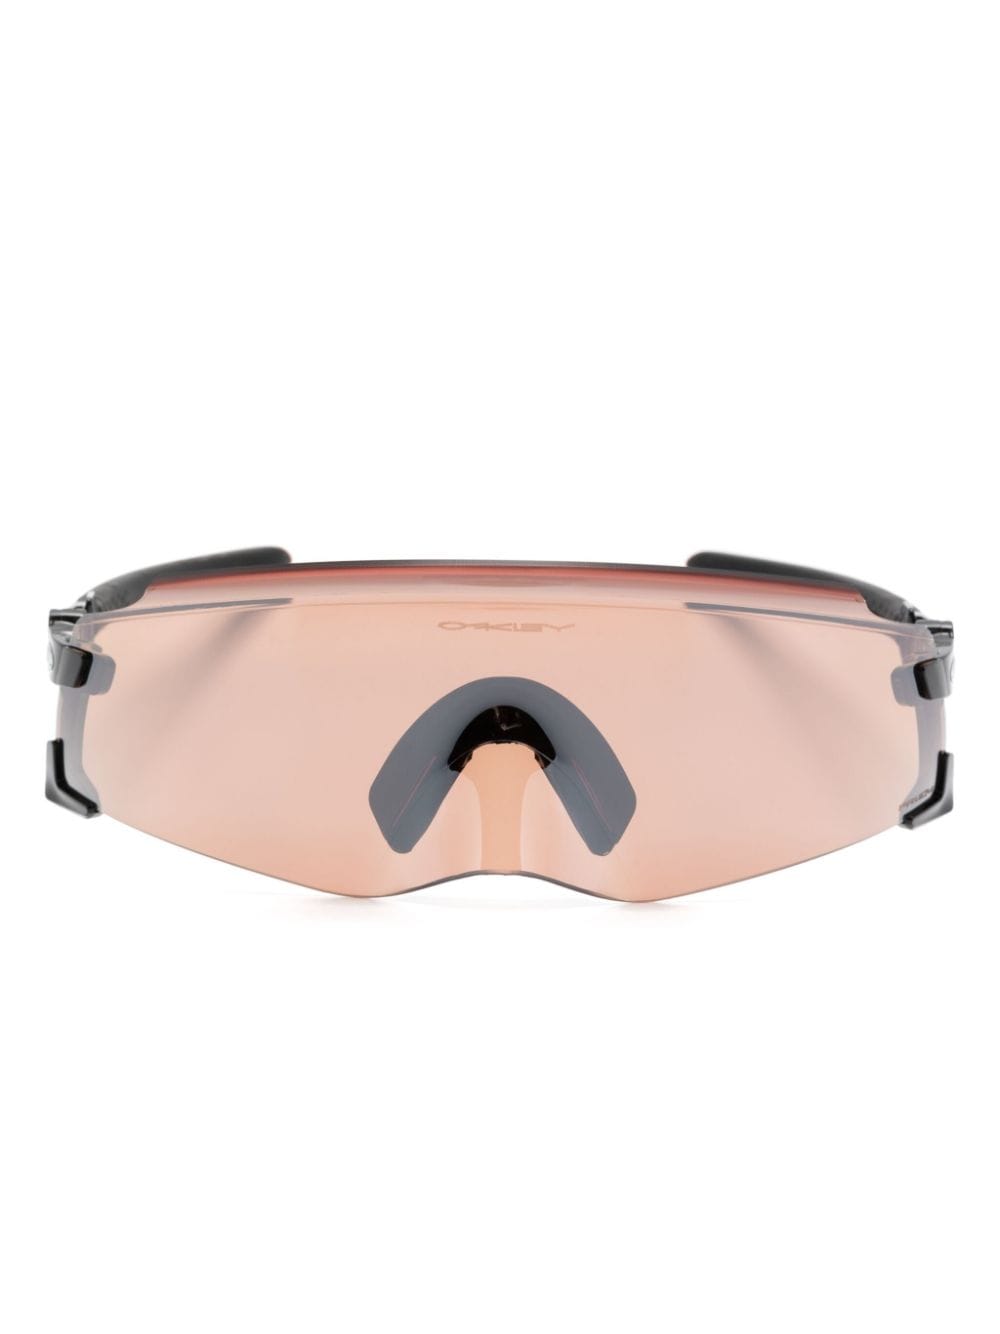 Kato wraparound-frame sunglasses<BR/><BR/><BR/>